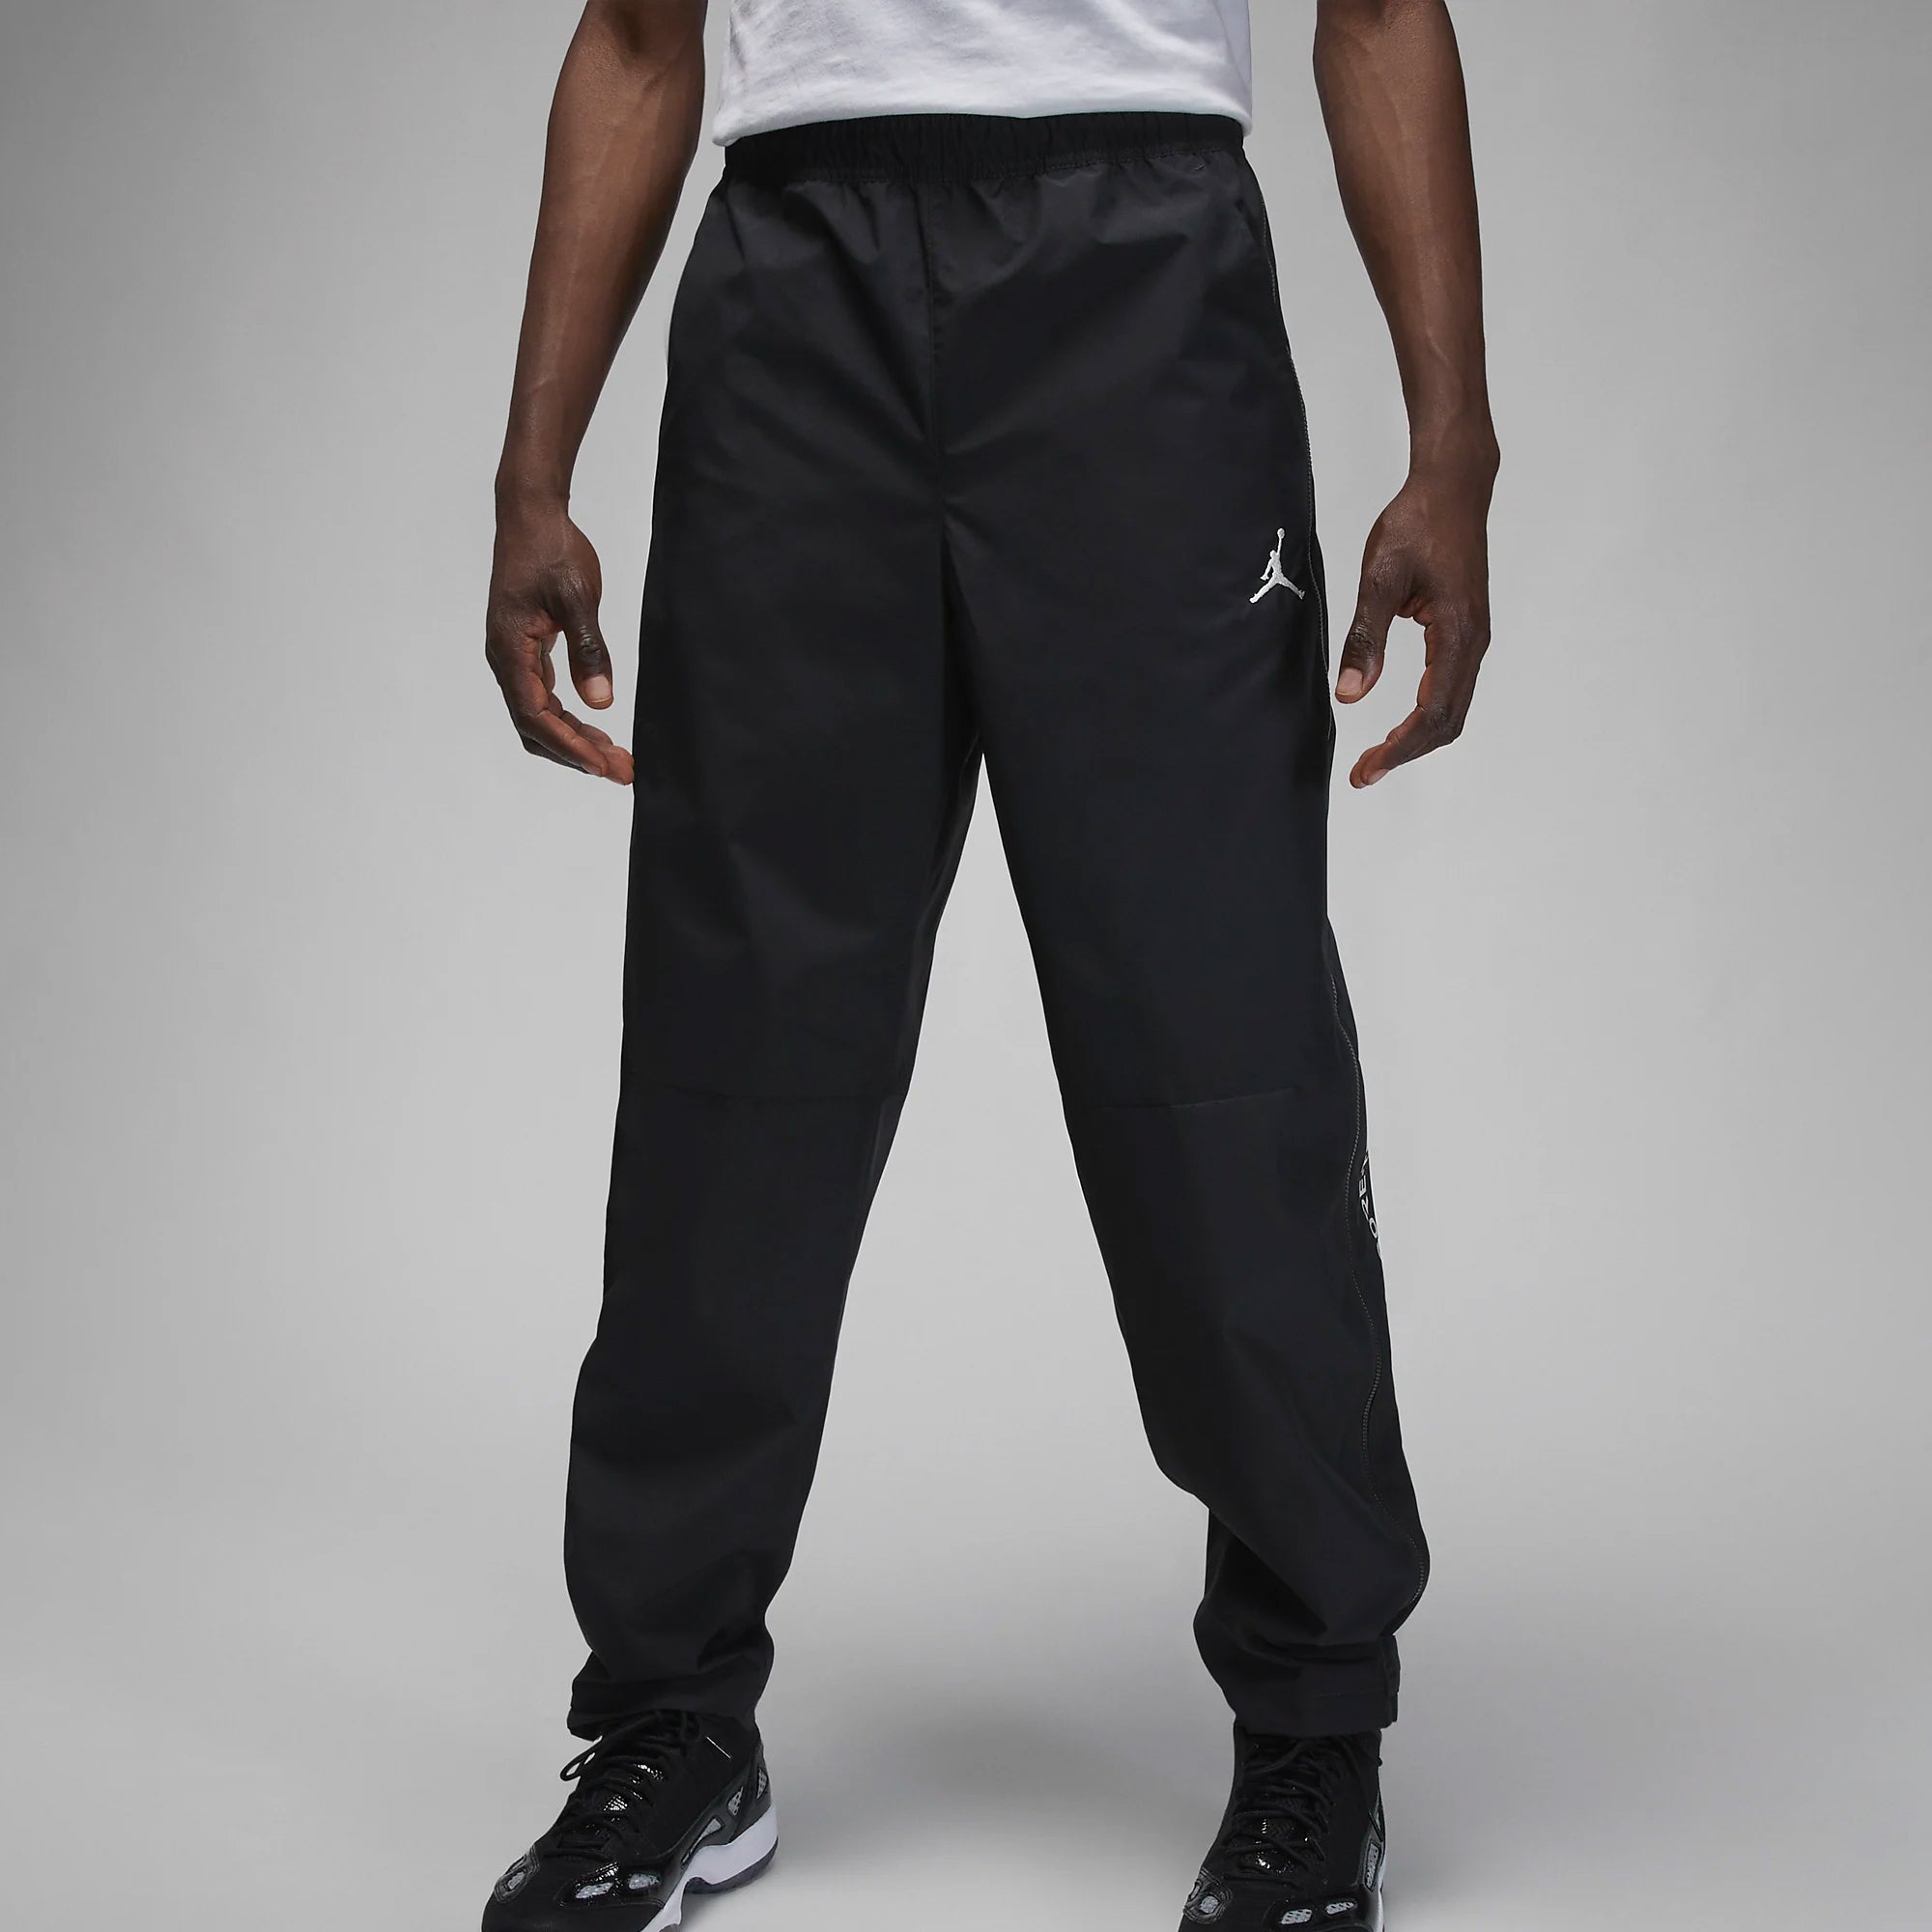 Air Jordan Compression Pants Men's Black New with Tags 4XL 406